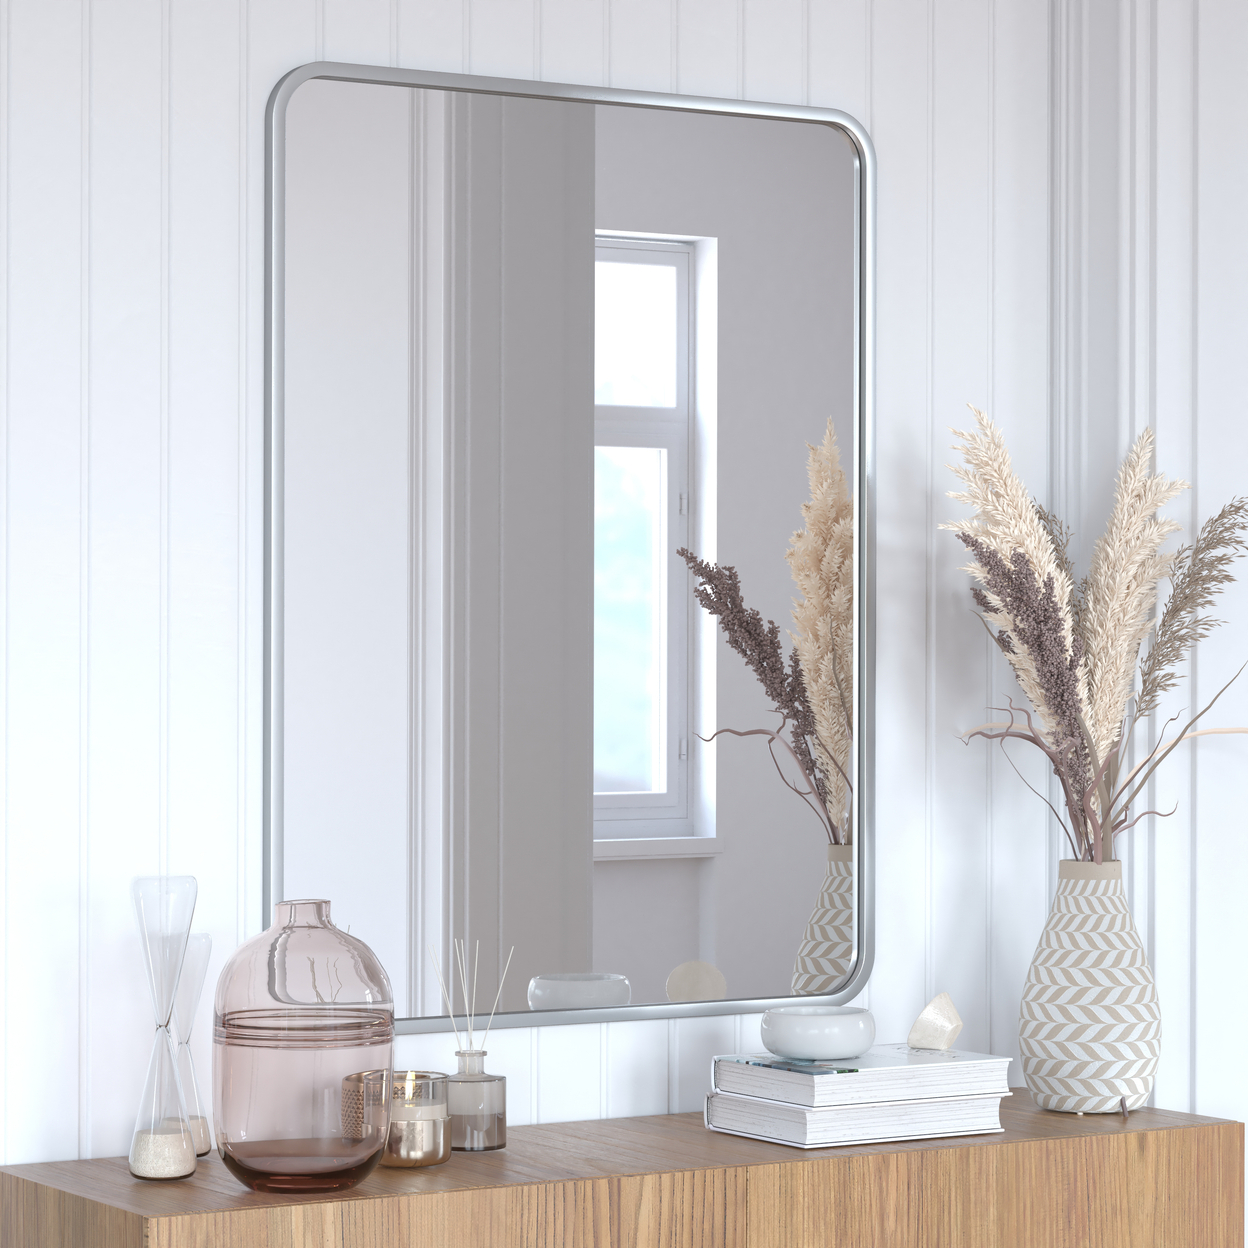 Jada 40 X 30 Decorative Wall Mirror - Rounded Corners, Bathroom & Living Room Glass Mirror Hangs Horizontal Or Vertical, Matte Silver